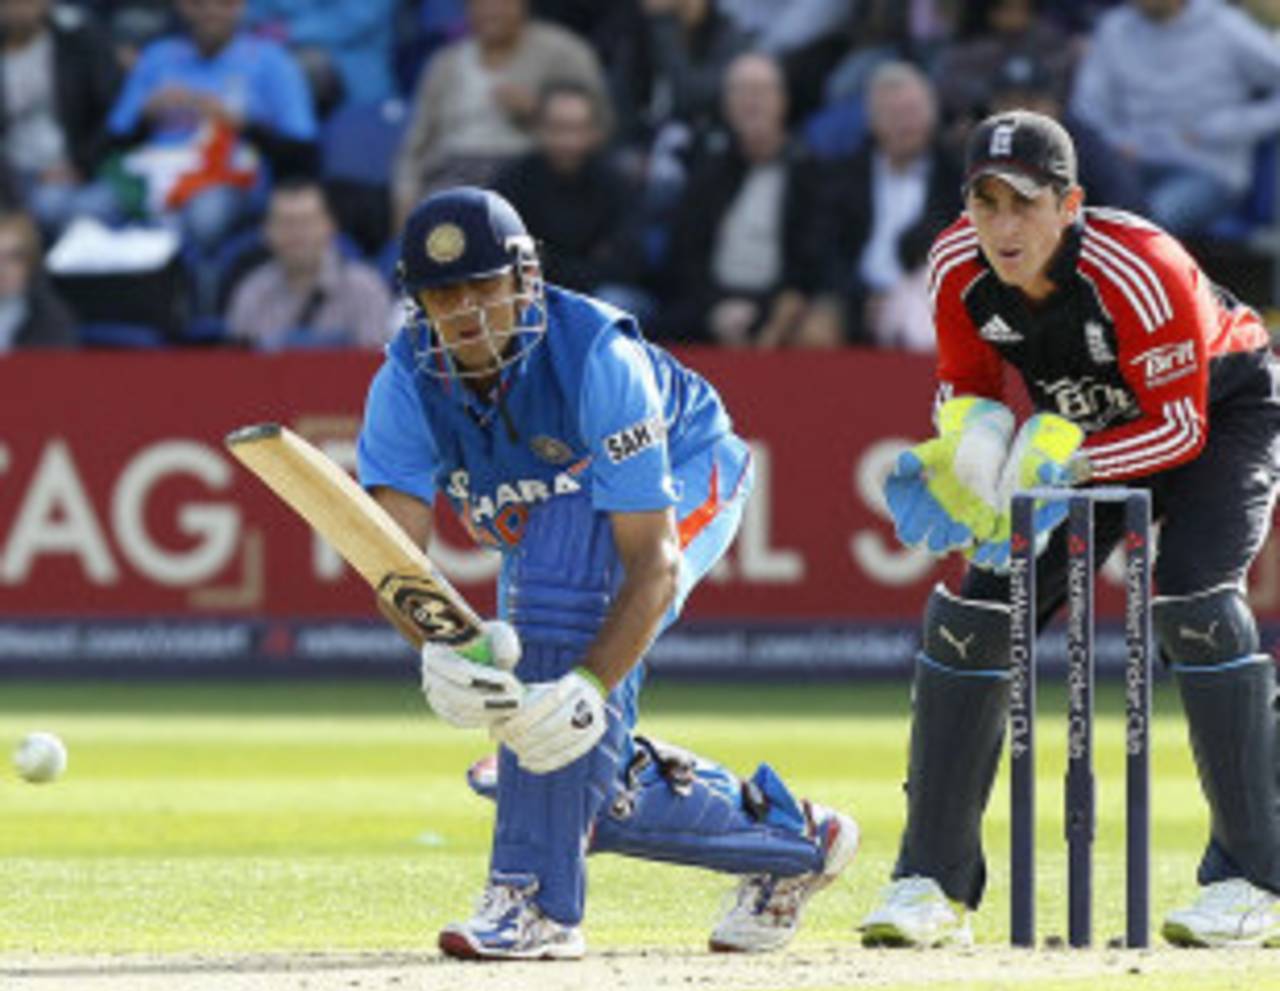 Rahul Dravid hits one away in his final ODI, England v India, 5th ODI, Cardiff, September 16, 2011